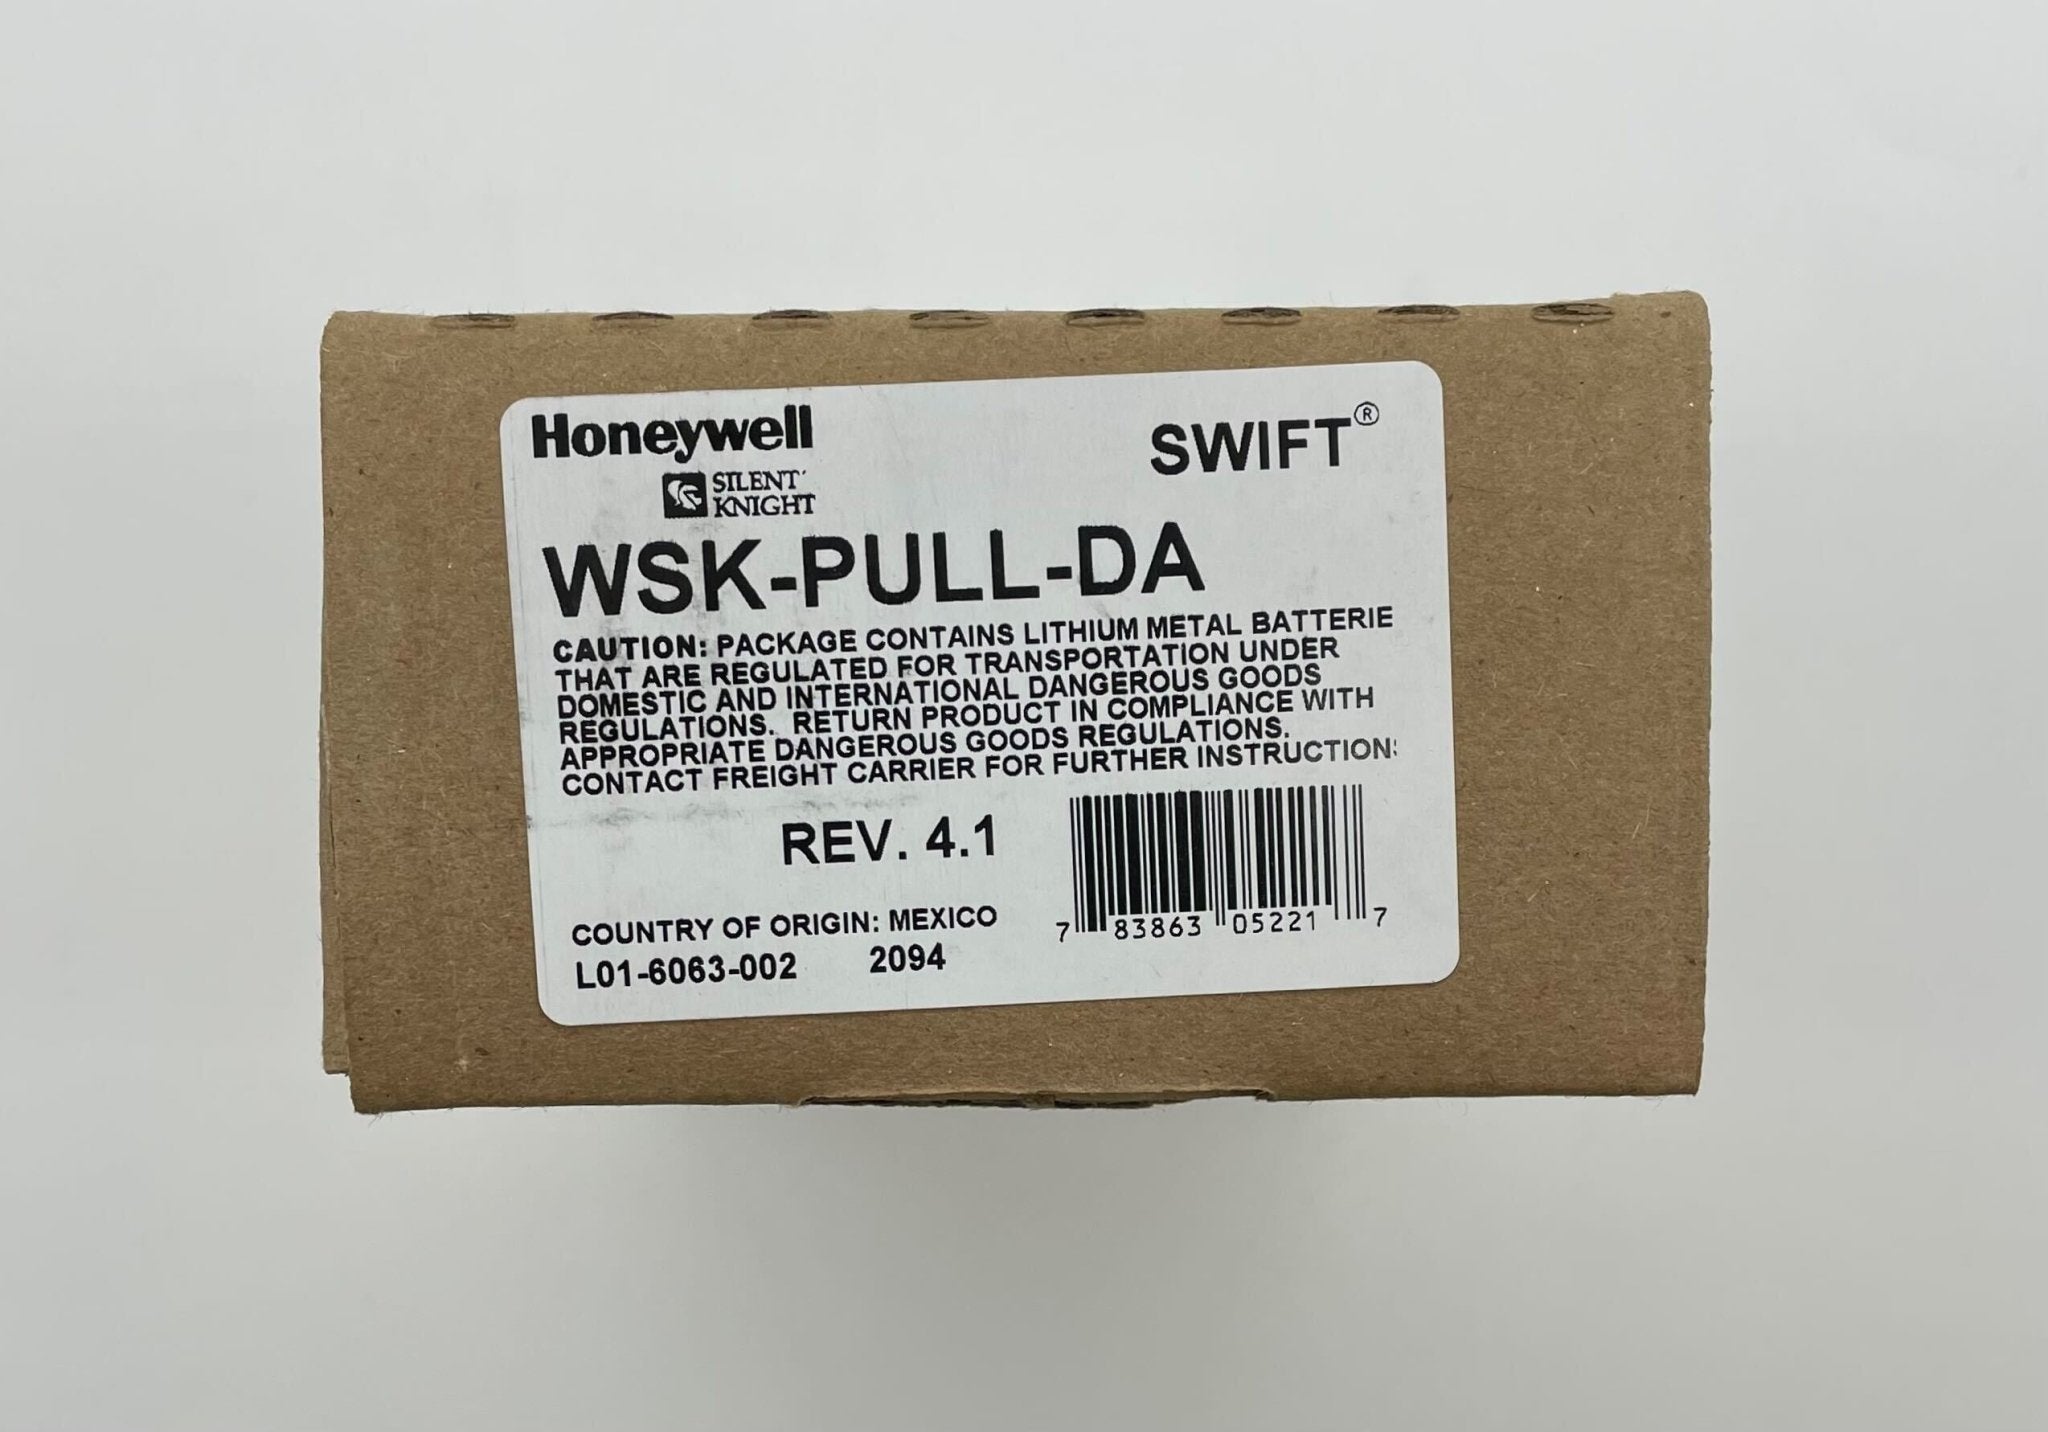 Silent Knight WSK-PULL-DA - The Fire Alarm Supplier